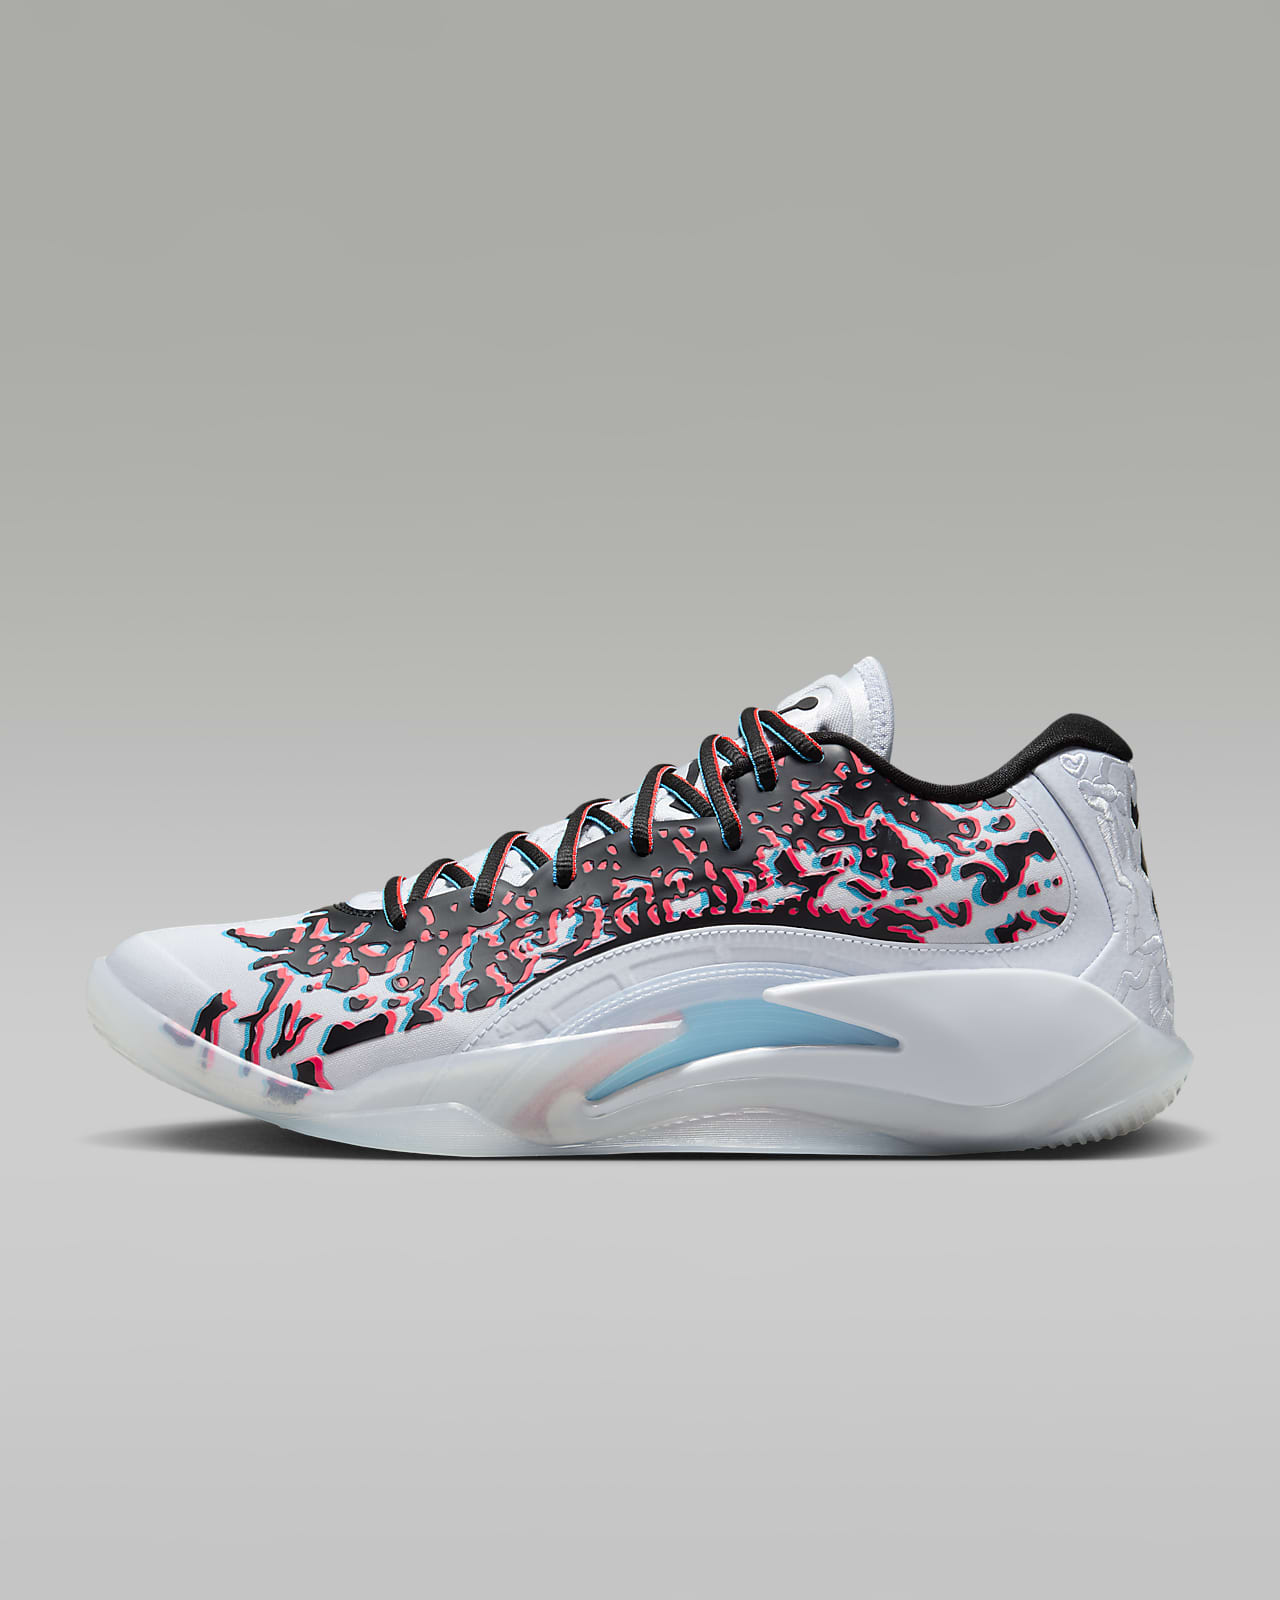 Zion 3 "Z-3D" Basketball Shoes